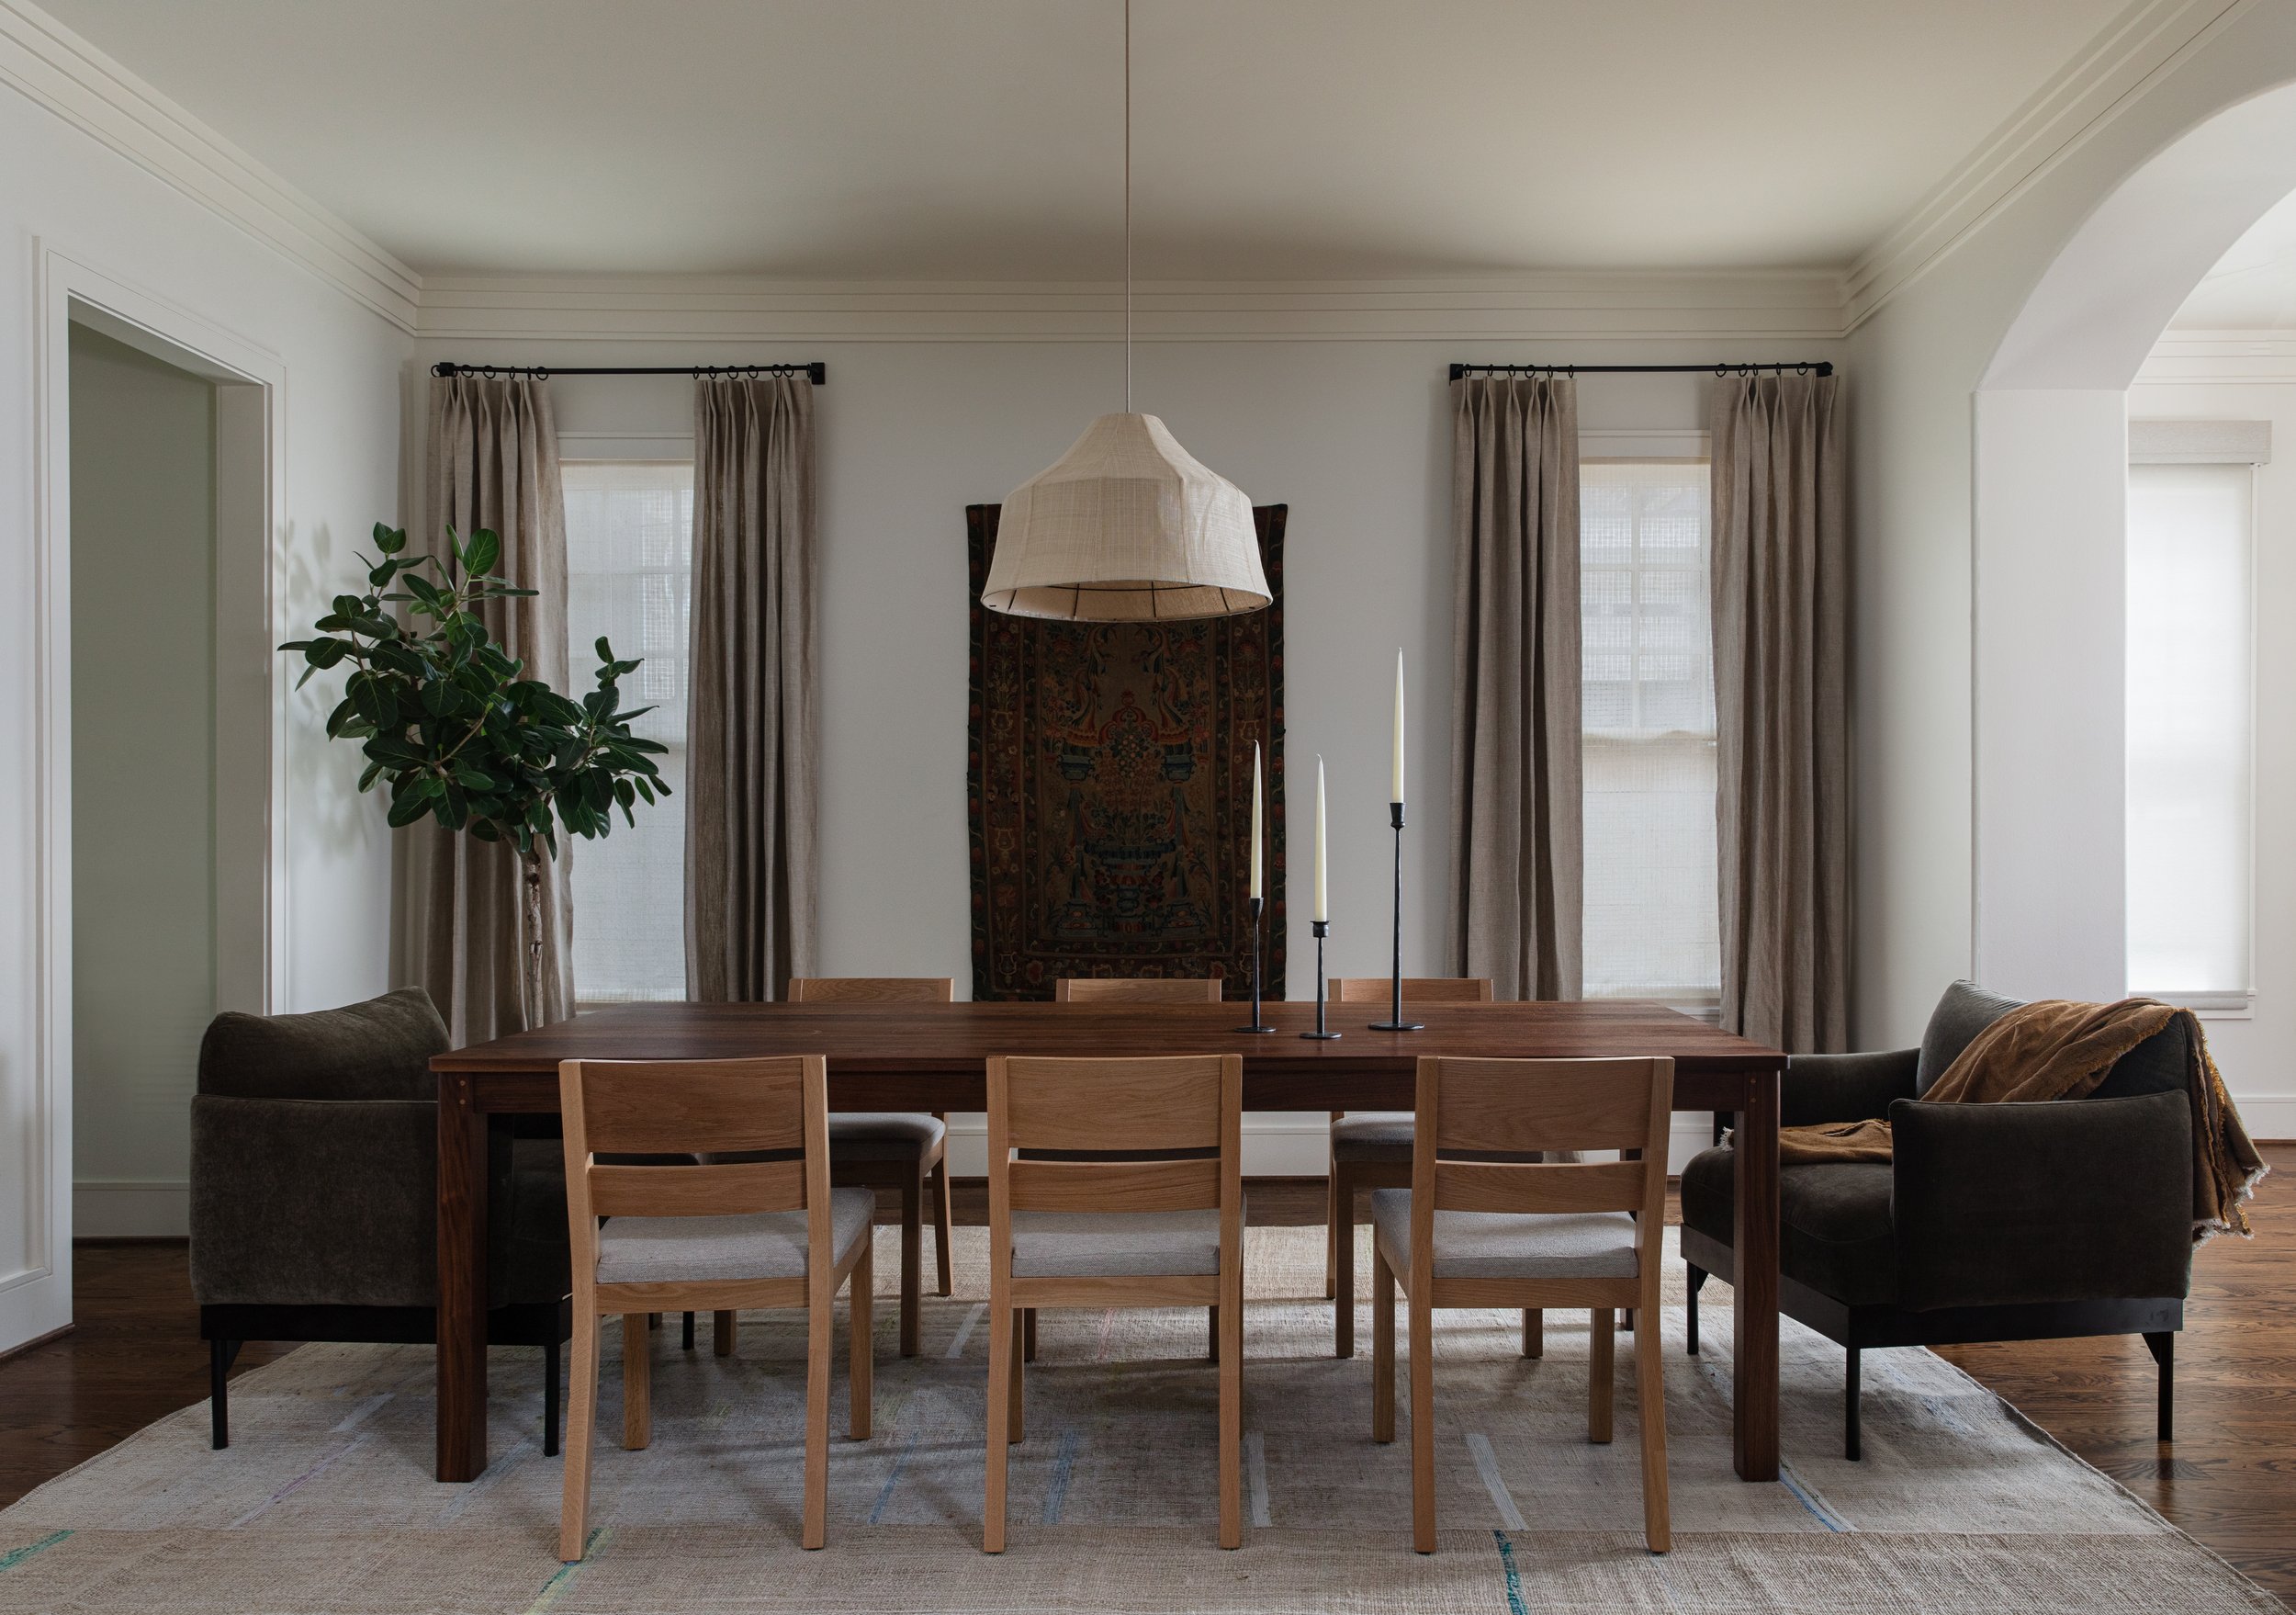  vermont shaker modernist bauhaus wabi sabi dining room interior design in houston texas 